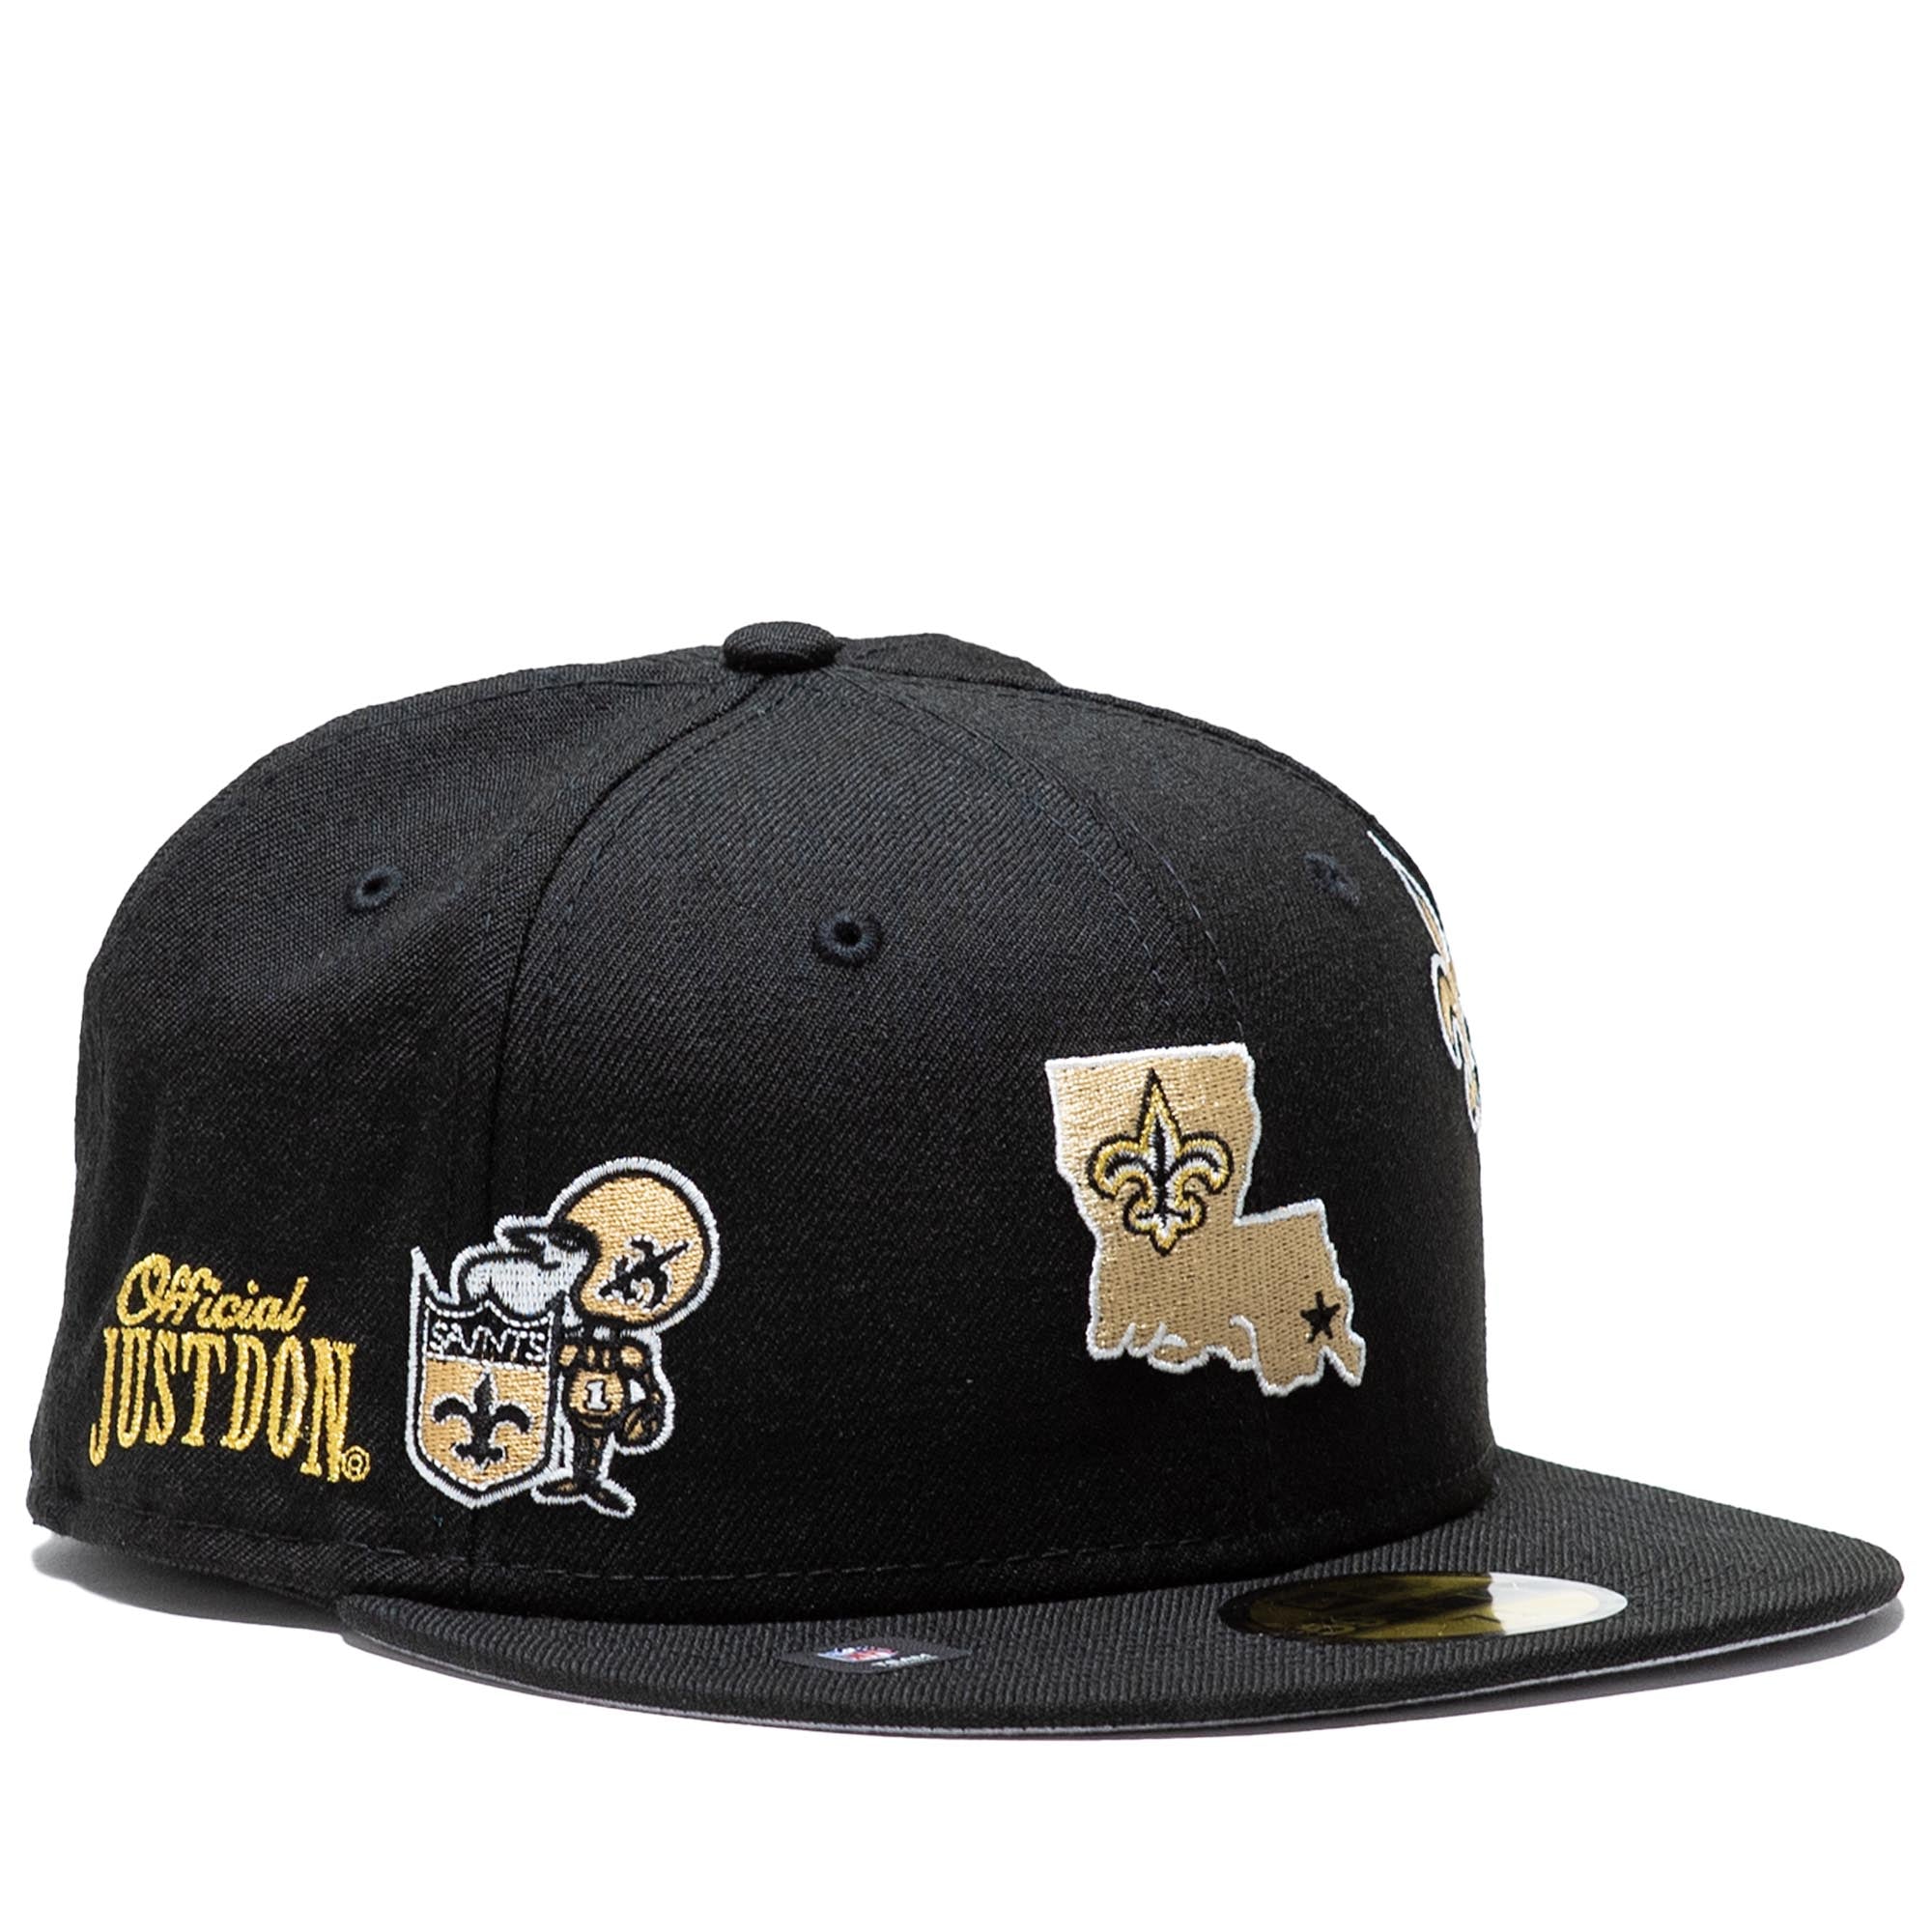 New Orleans Saints NFL TEAM-BASIC Black-White Fitted Hat